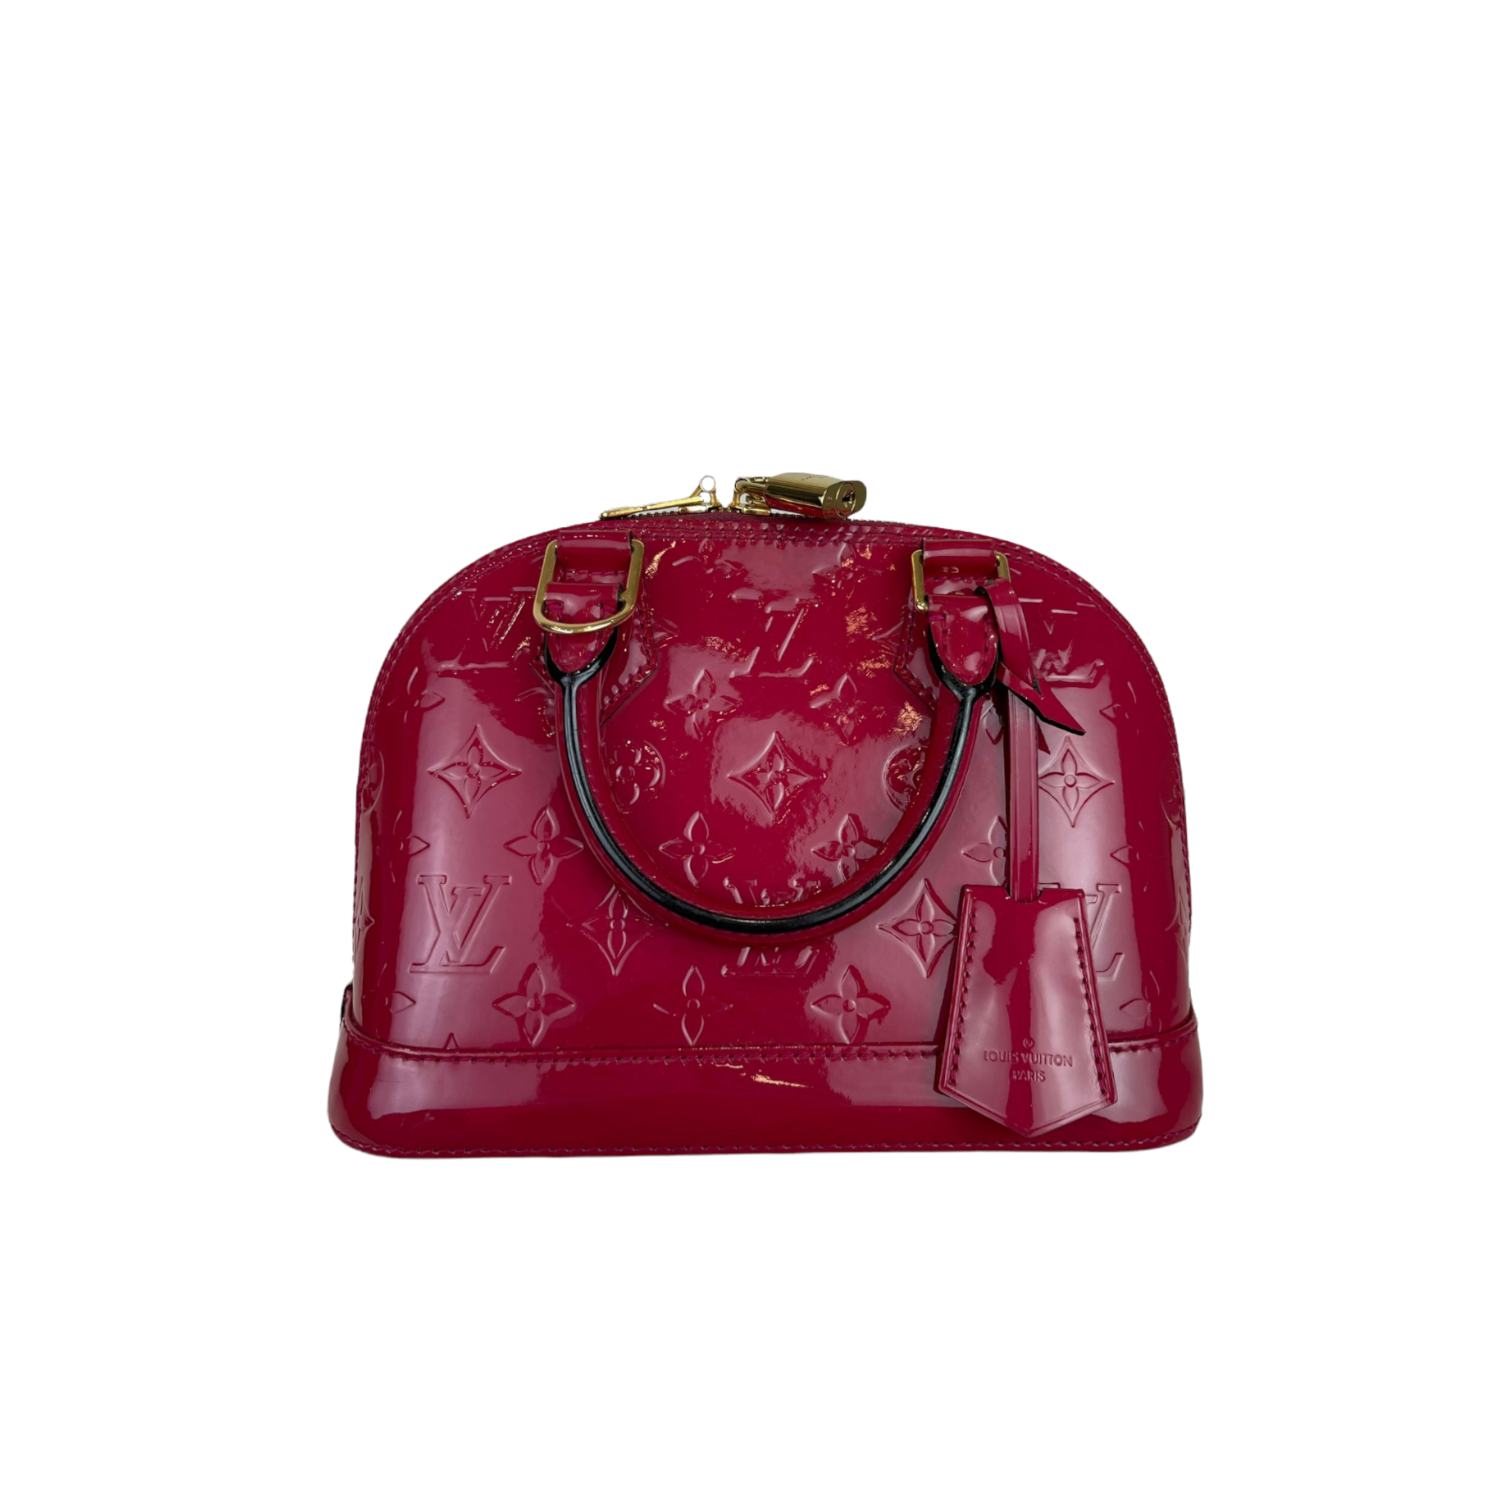 Louis Vuitton, Bags, Louis Vuitton Alma Mm Red Vernis